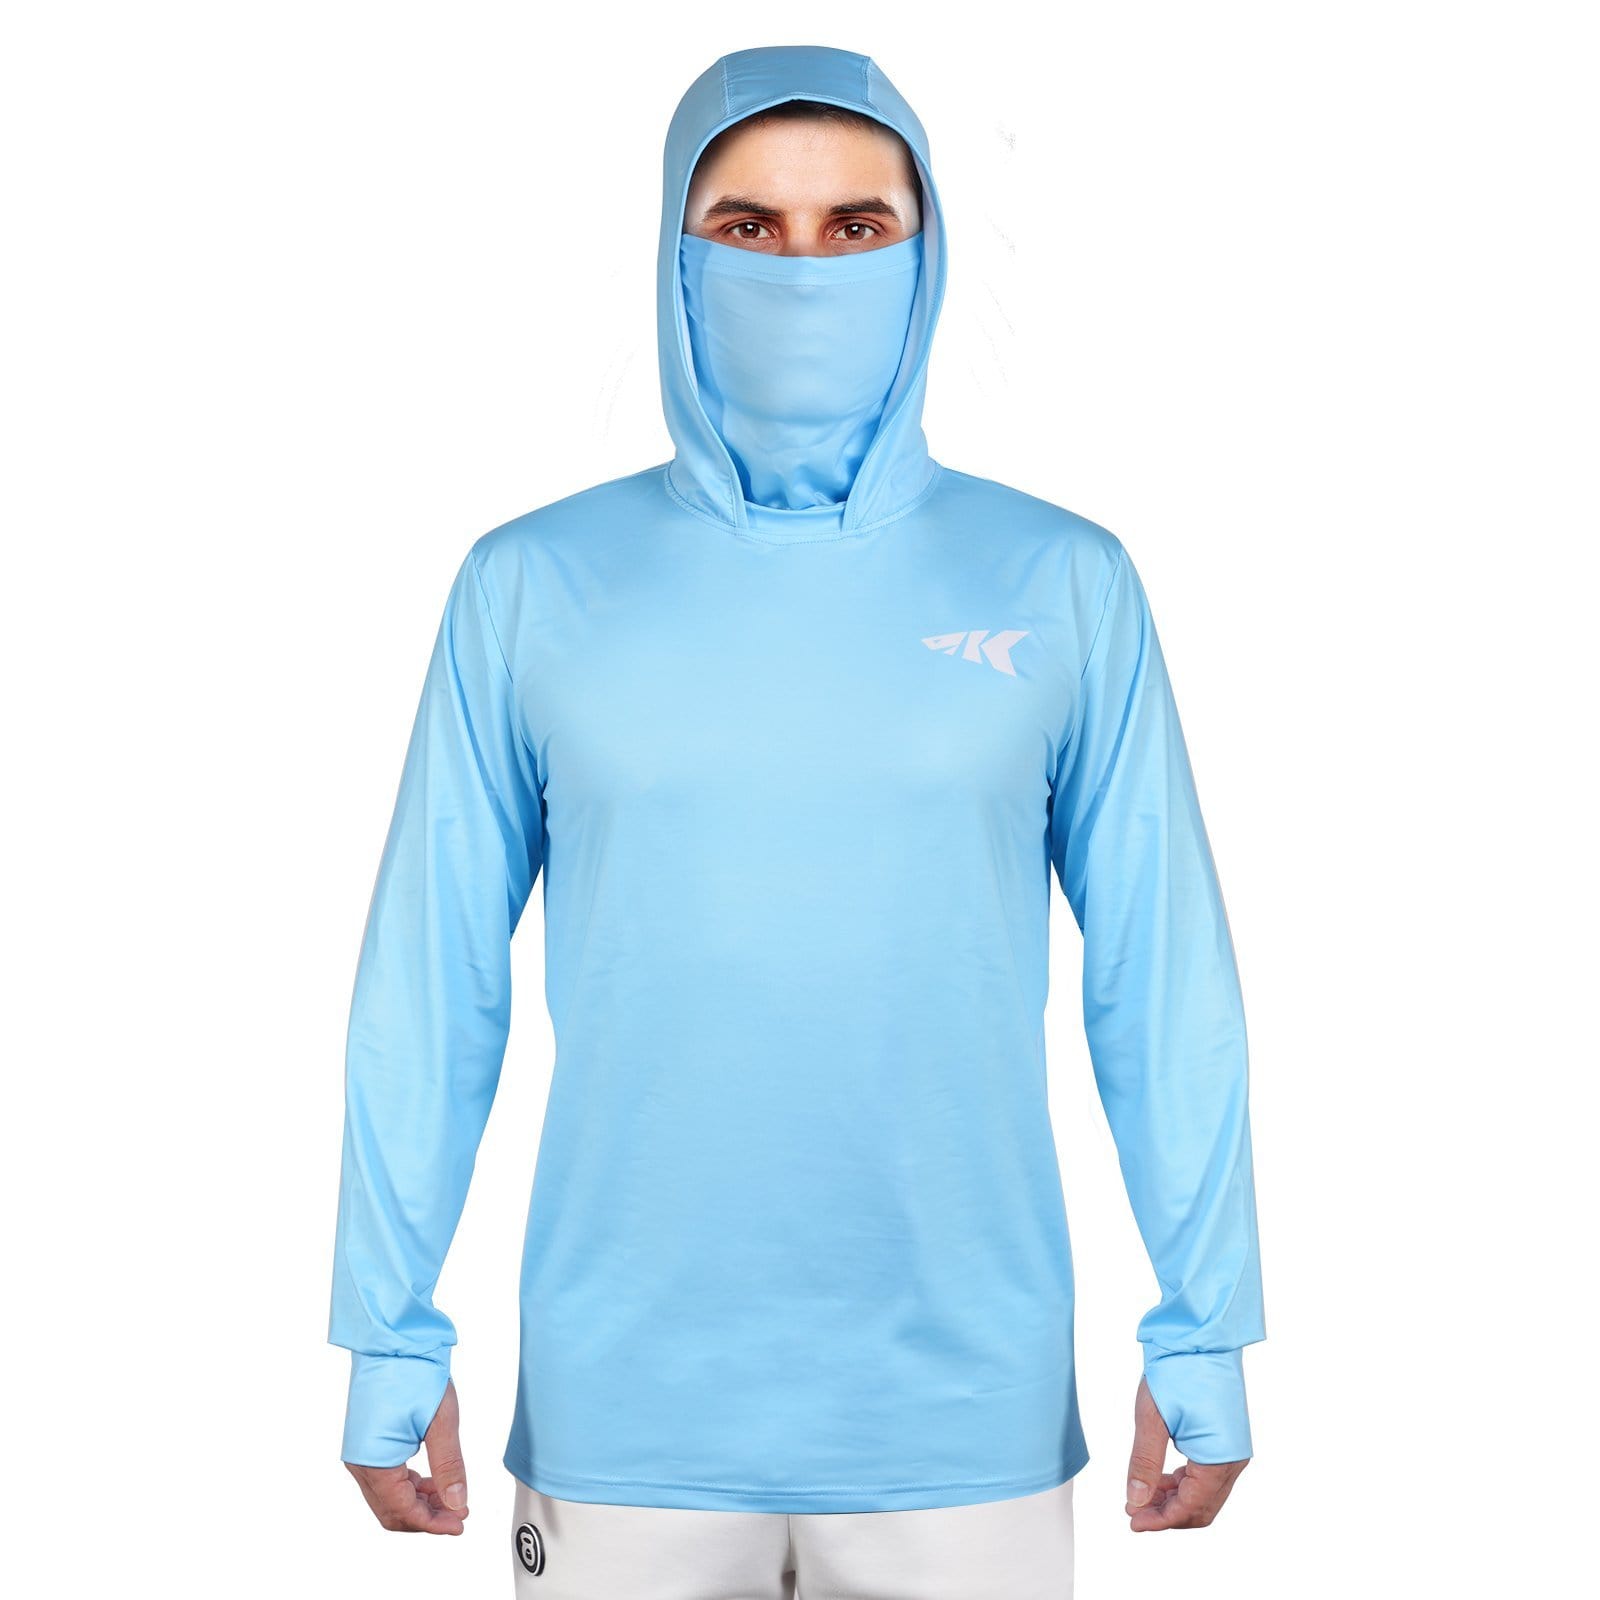 KastKing Men's Long Sleeve Fishing Shirt (With Neck Gaiter) - Blue / Medium